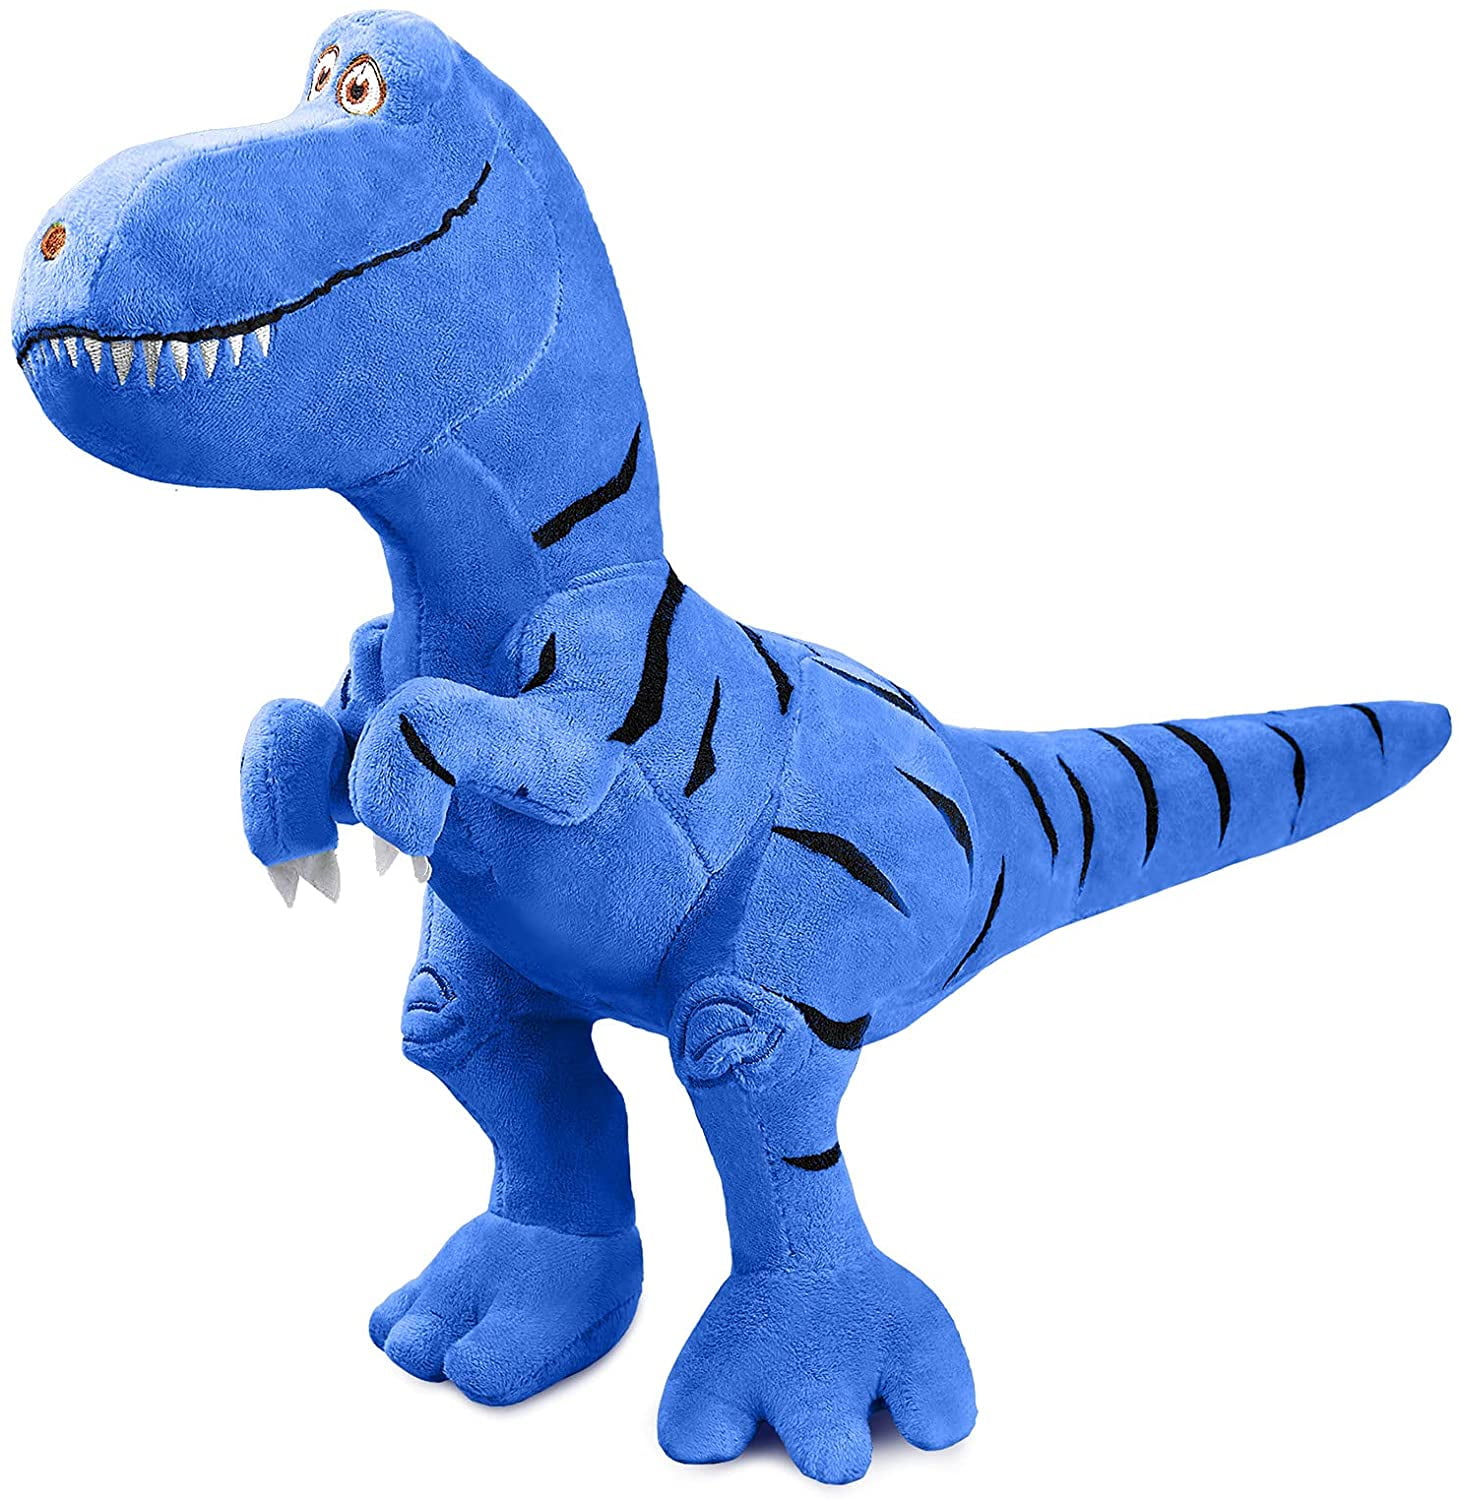 Giant Large Dinosaurs Rex blue Plush Xmas Toys Kids Soft Cuddly Stuffed Animals 